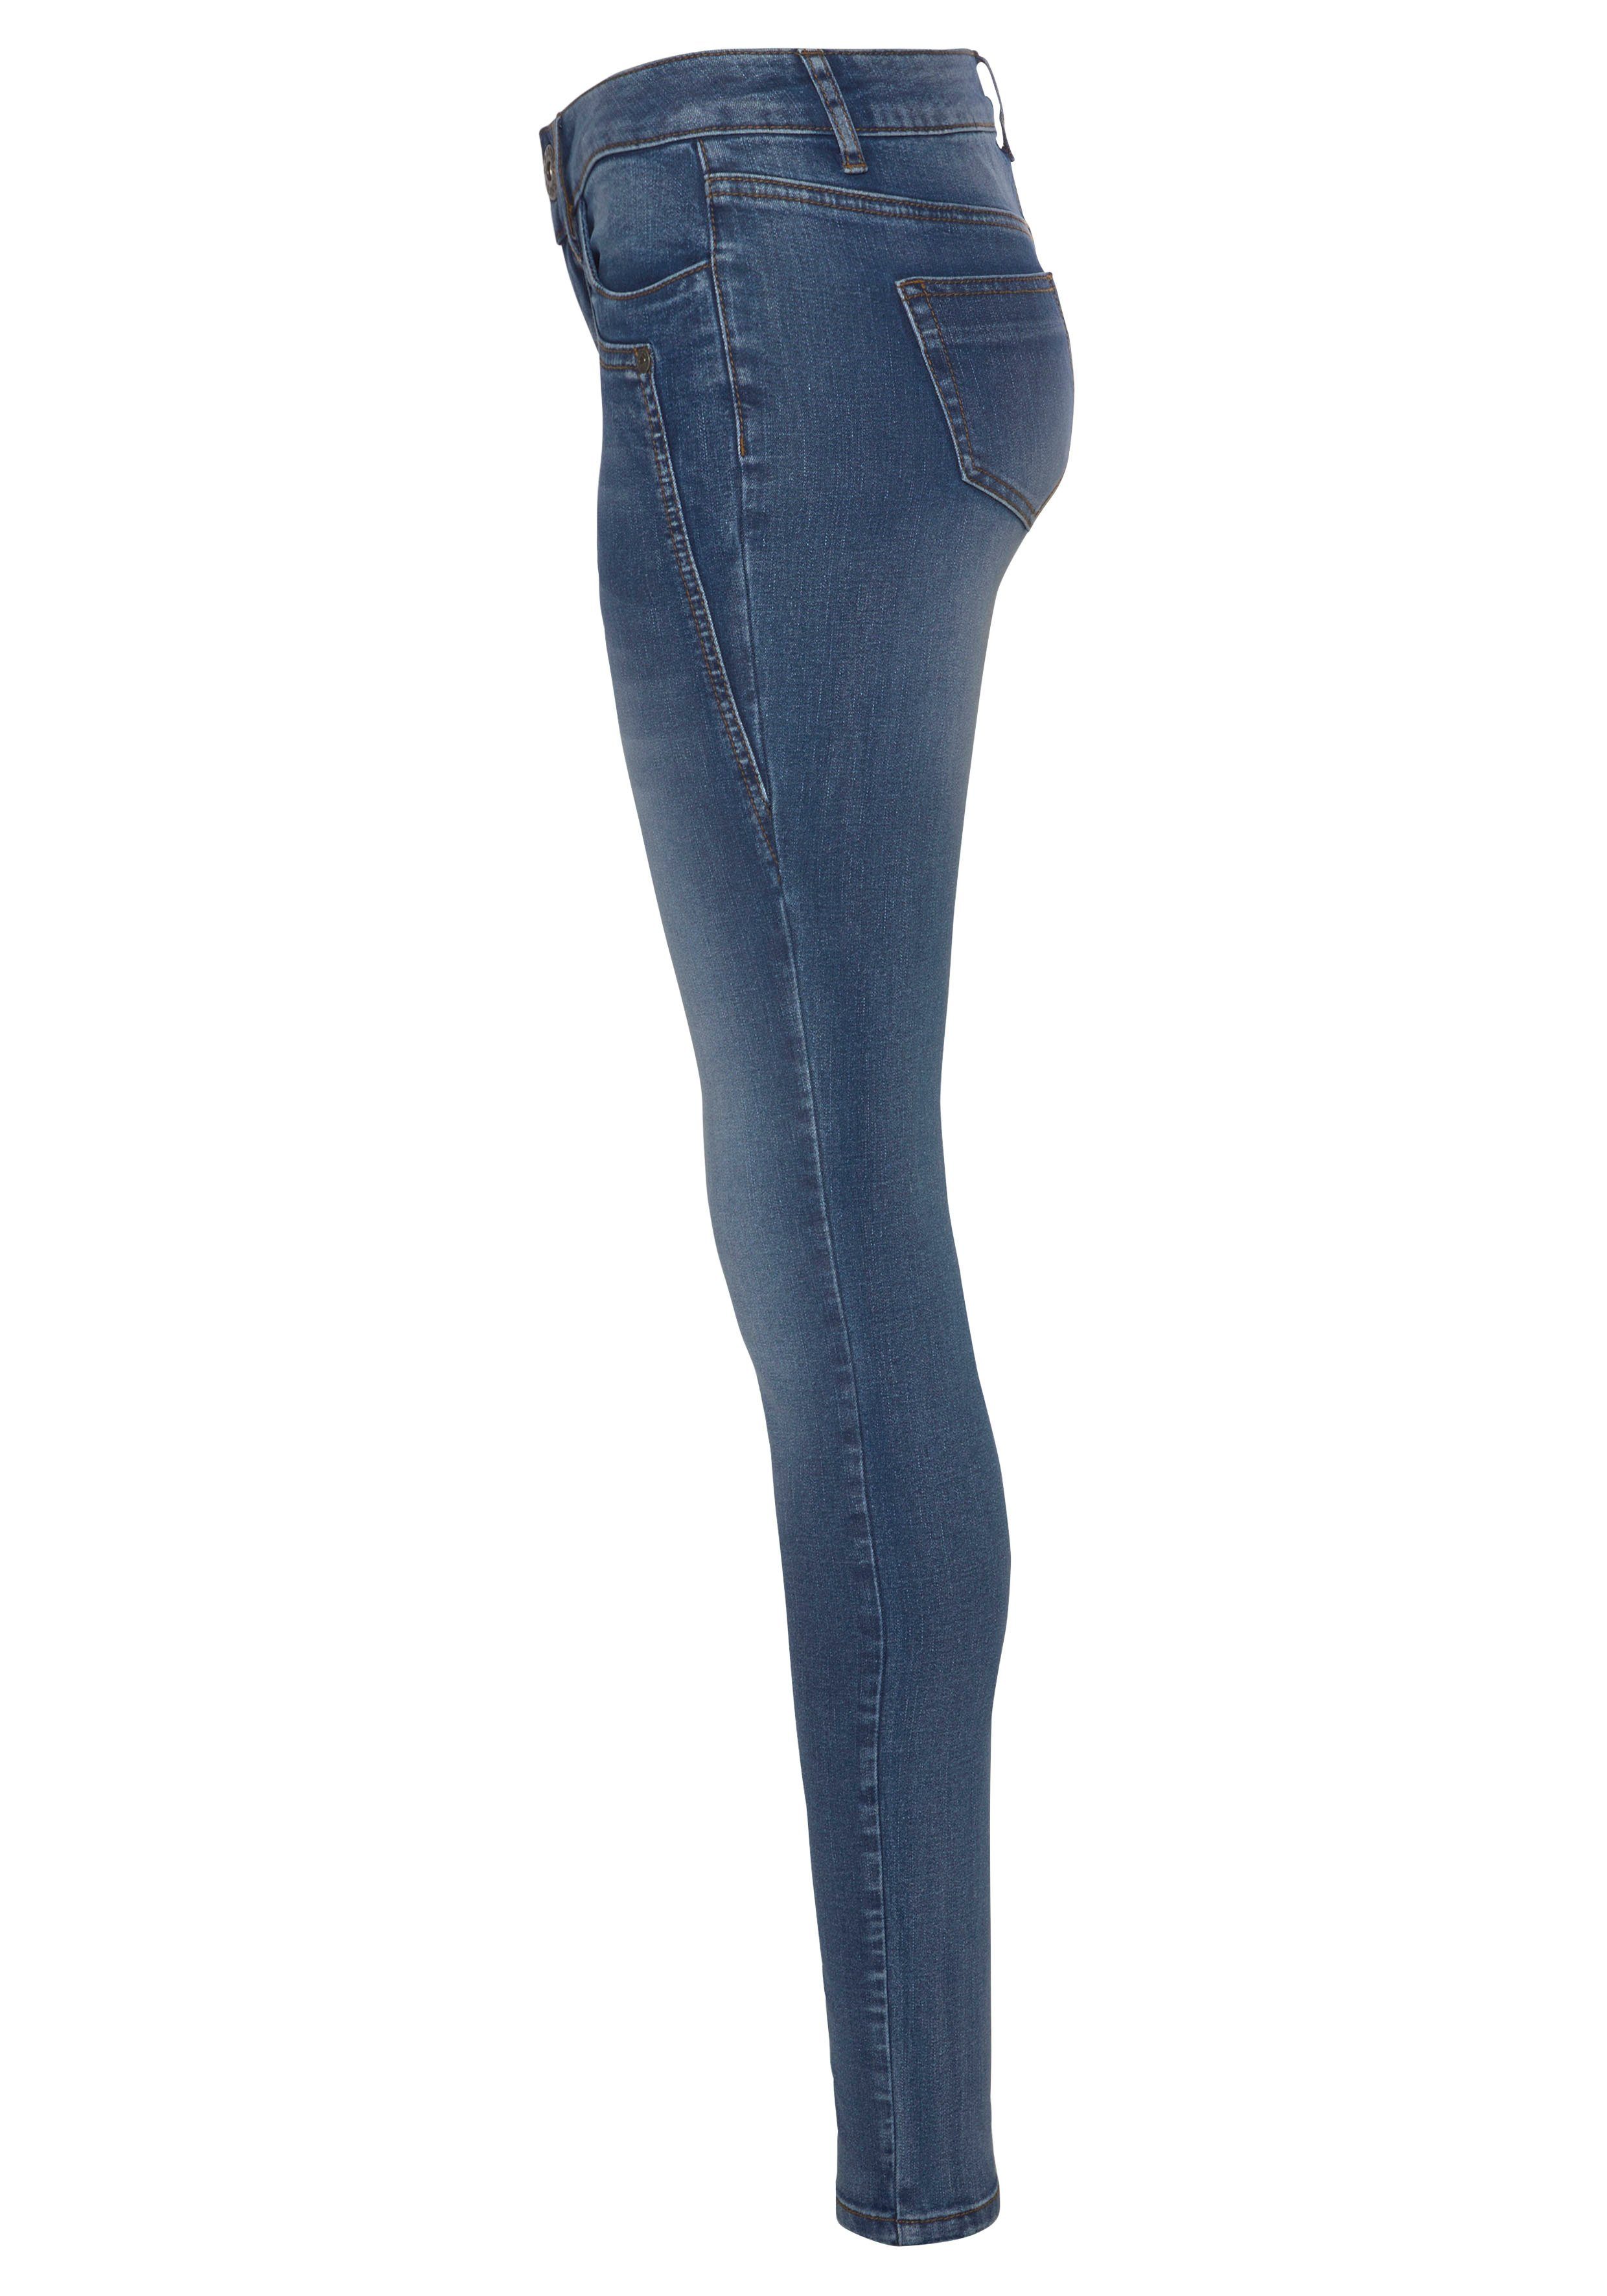 Arizona Waist Keileinsätzen Skinny-fit-Jeans Low mid-blue-used mit